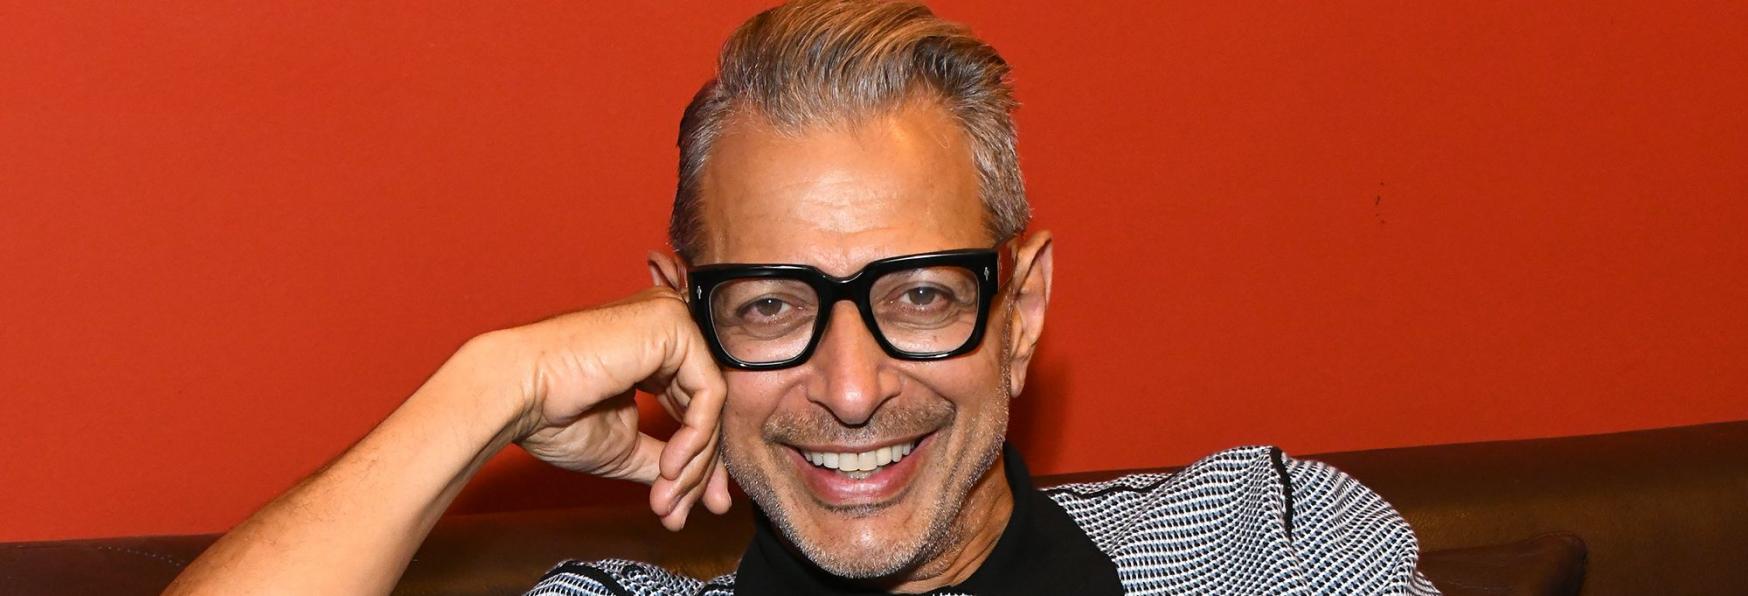 Kaos: Jeff Goldblum interpreterà Zeus al posto di Hugh Grant nella nuova Serie TV Netflix